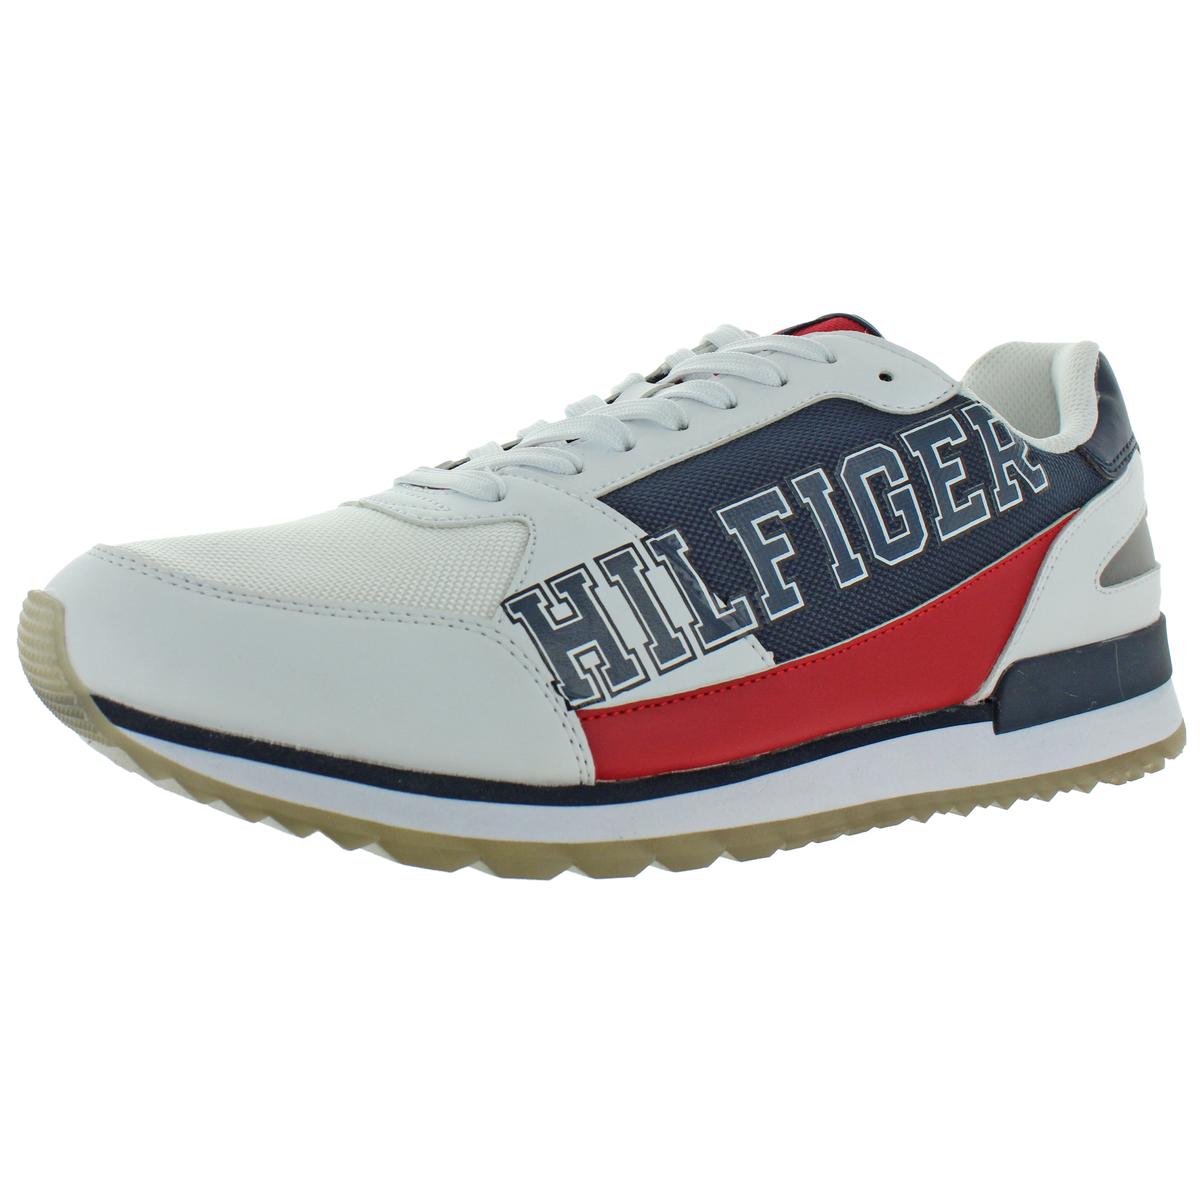 hilfiger tennis shoes